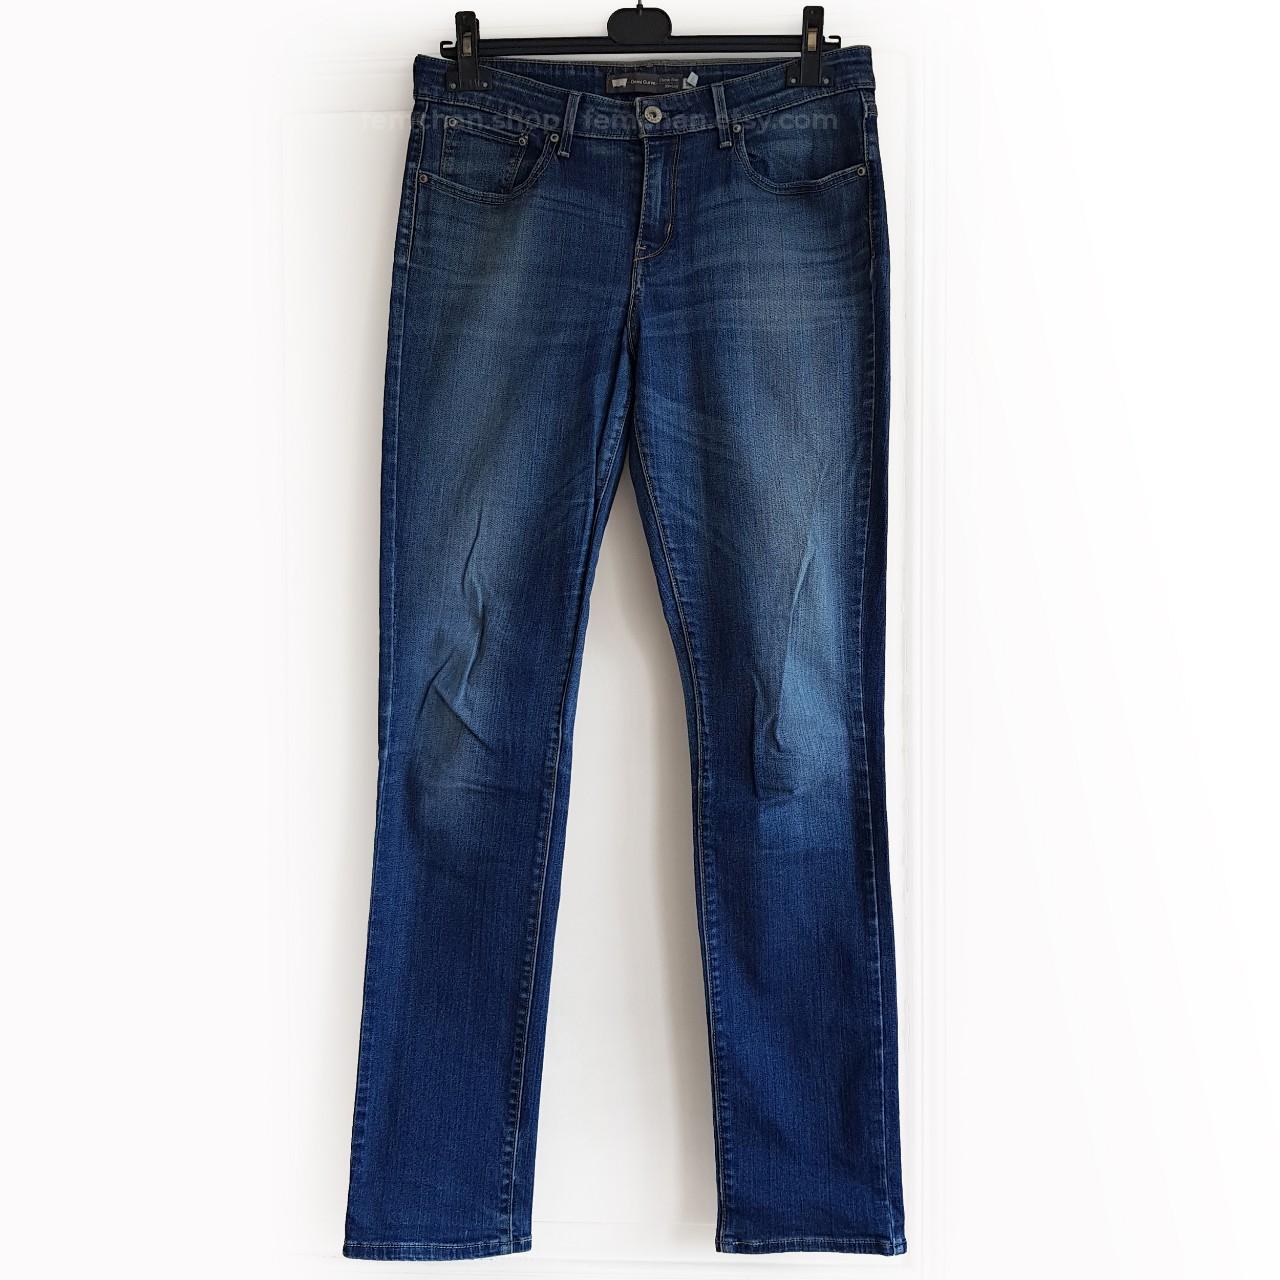 Levi's Demi Curve classic rise slim jeans. Striking... - Depop